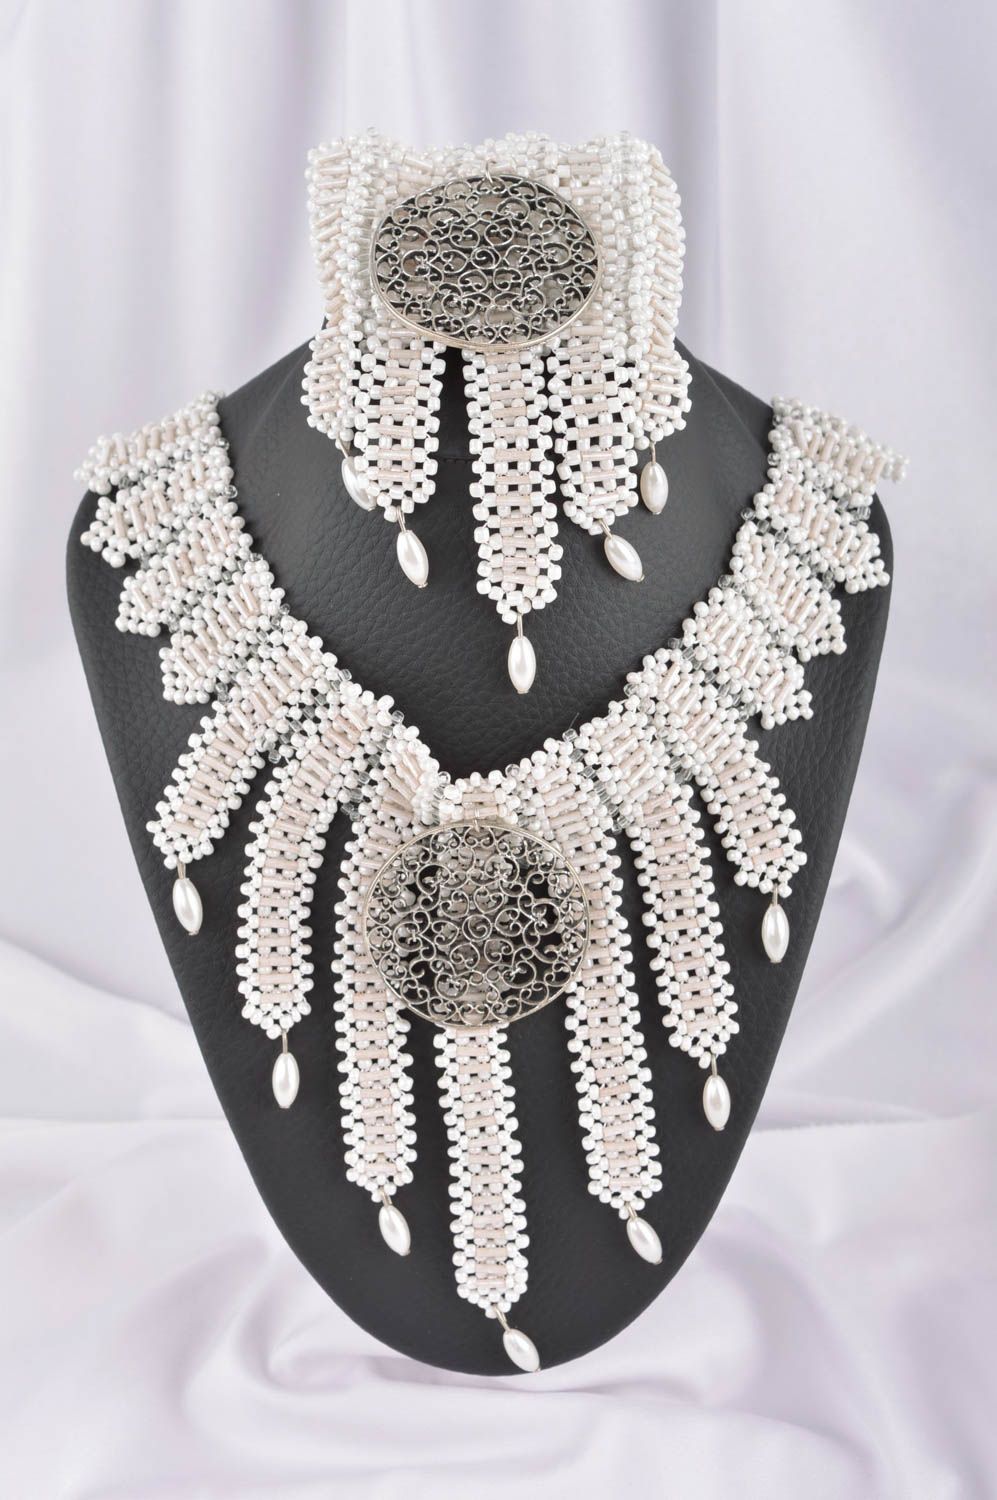 Handmade accessories designer jewelry set of 2 items unusual gift for women photo 1